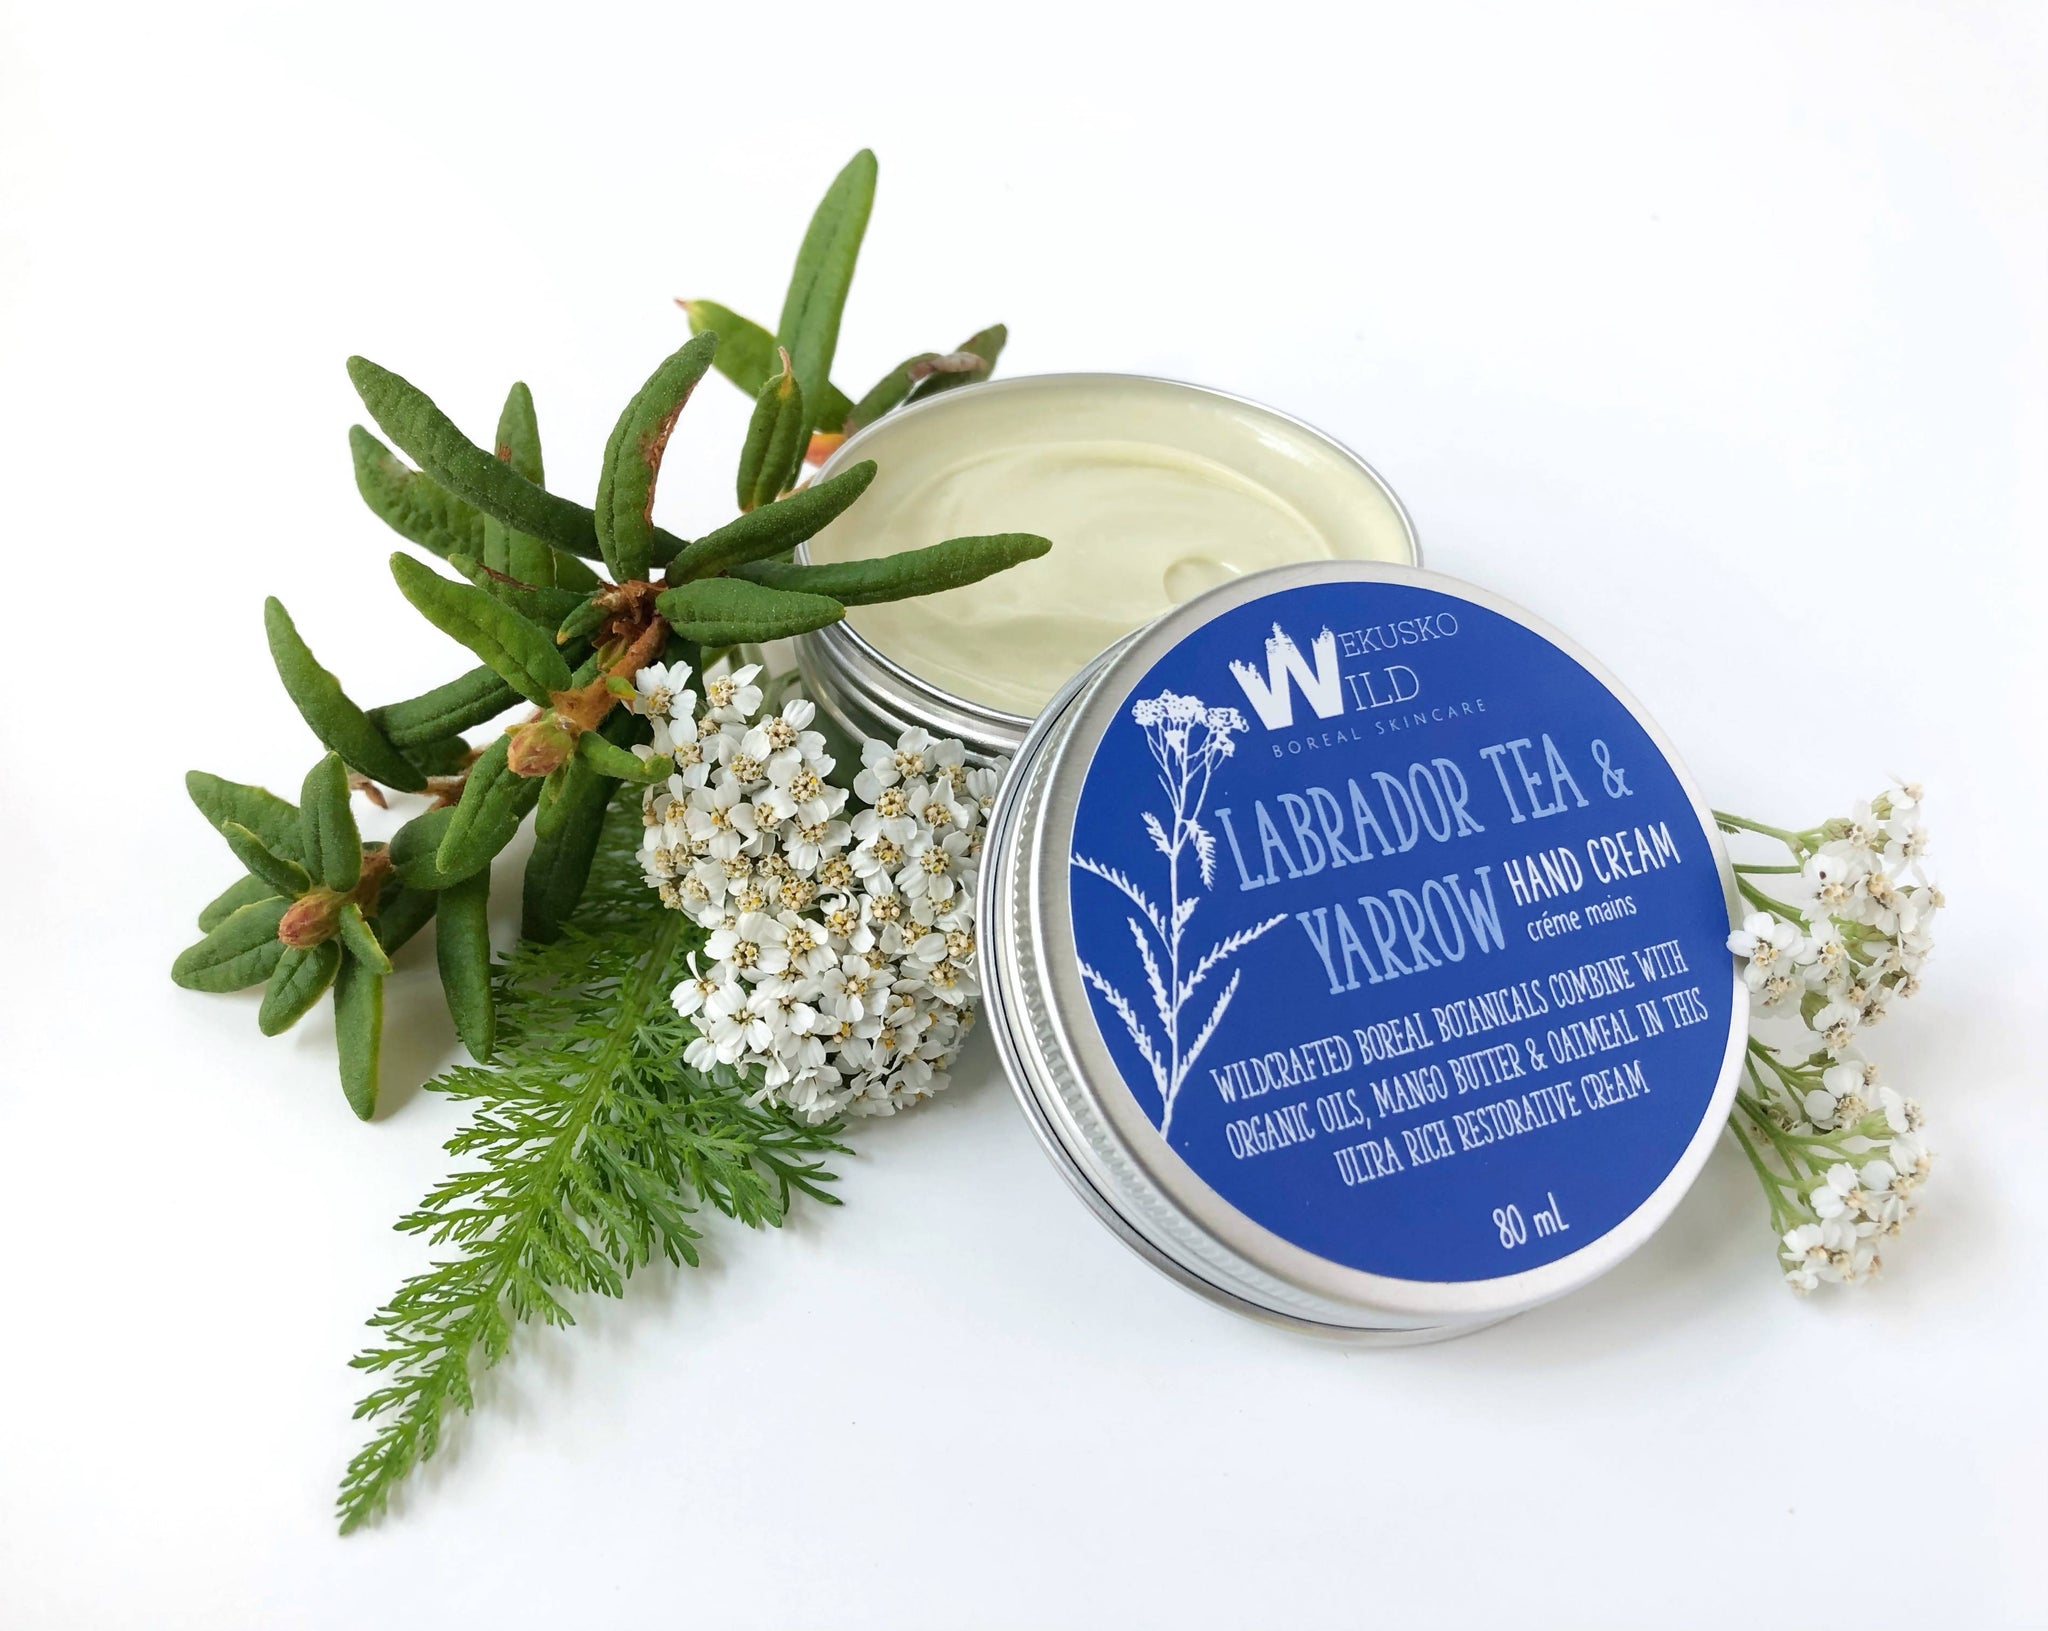 Labrador tea & yarrow hand cream - WEKUSKO WILD Boreal Skincare